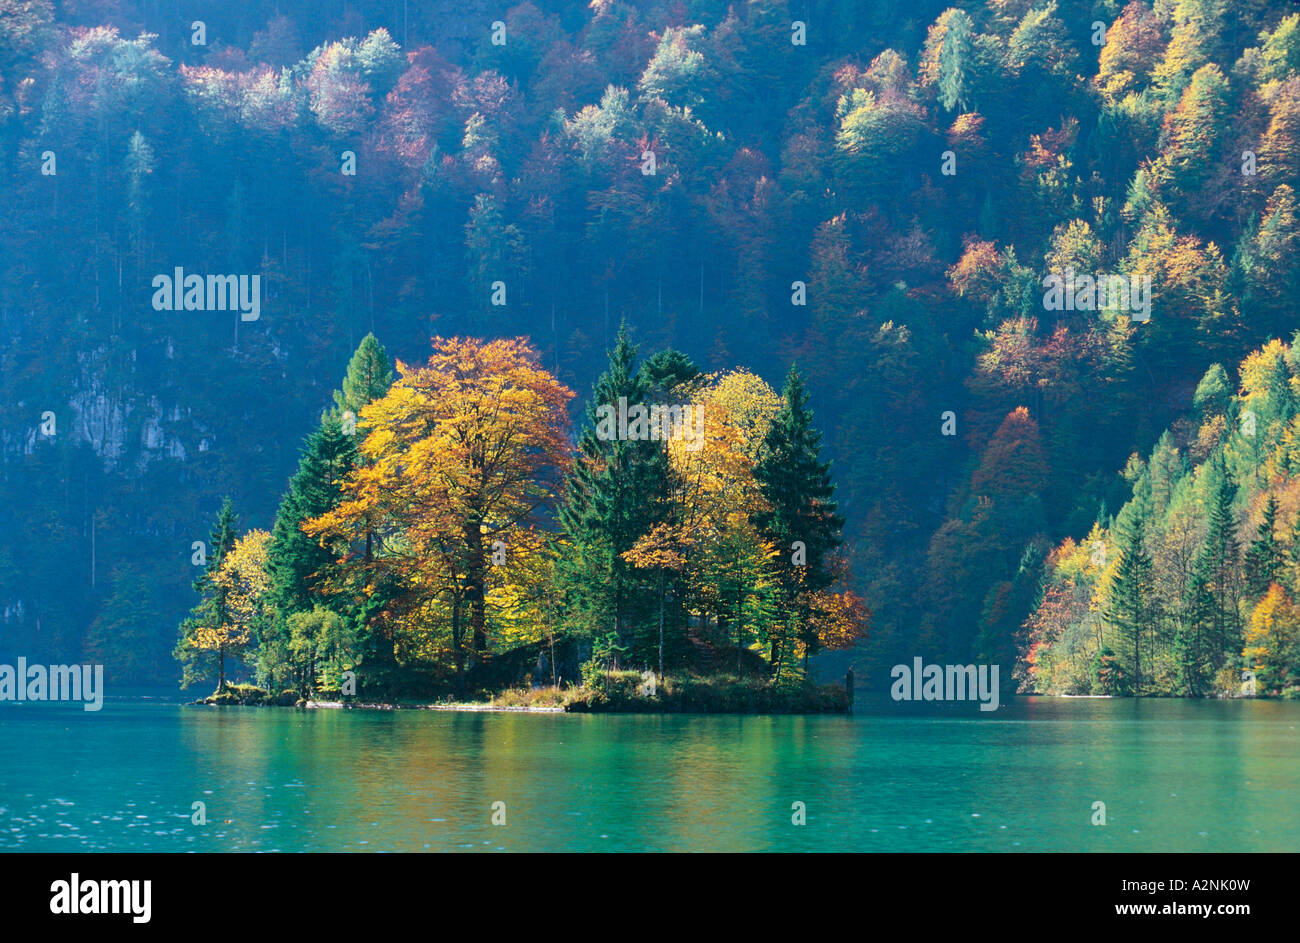 Trees on small island in lake, Konigssee, Berchtesgaden, Bavaria, Germany Stock Photo